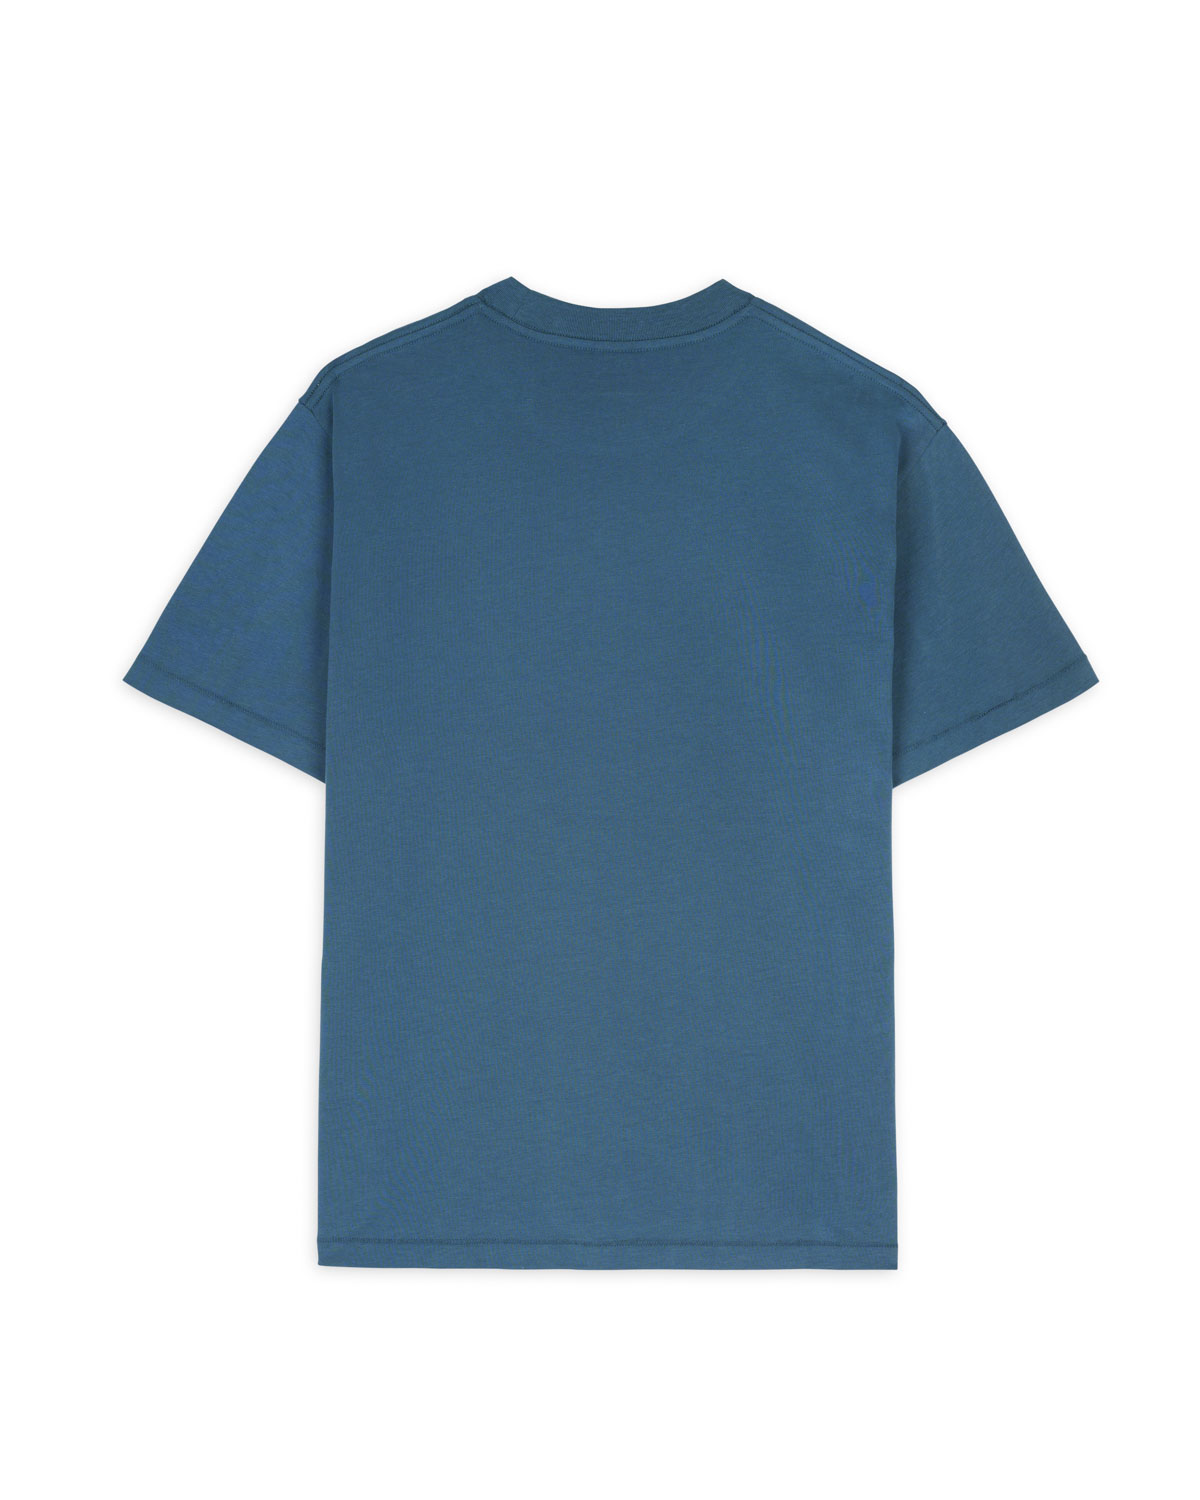 Easy Shirt - Mallard 2